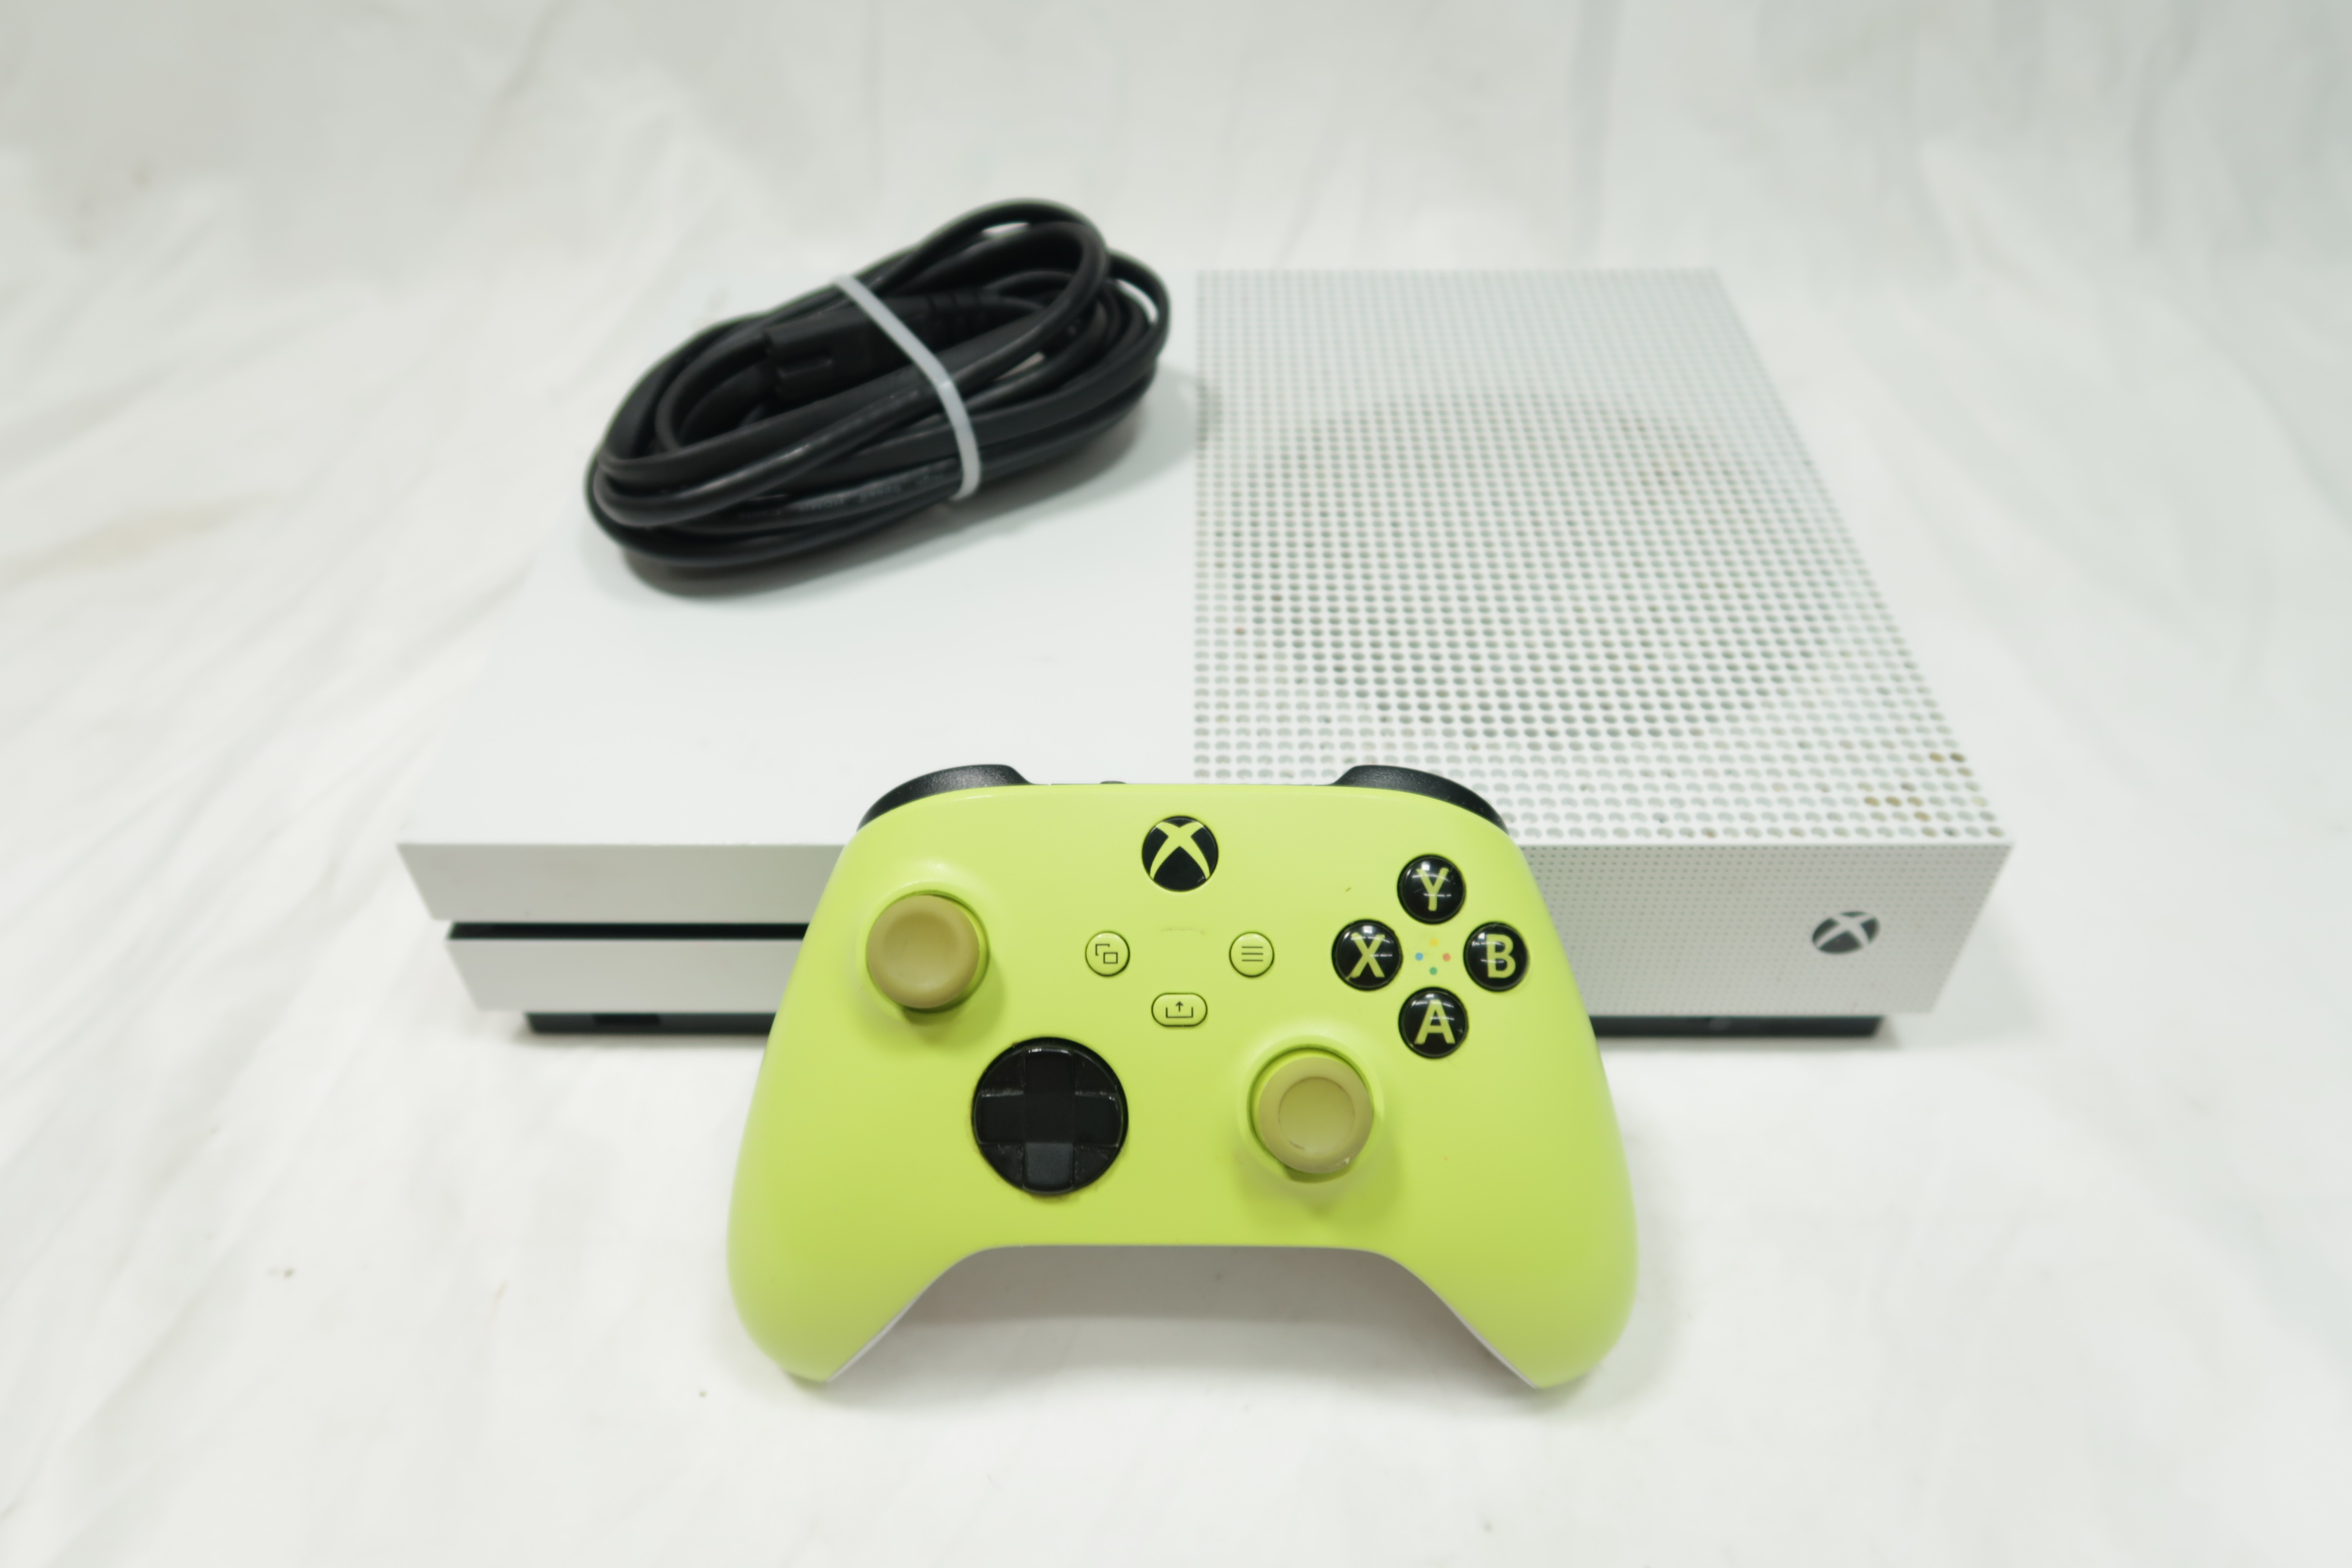 Microsoft Xbox One S All-Digital Edition 1681 1TB Storage Video